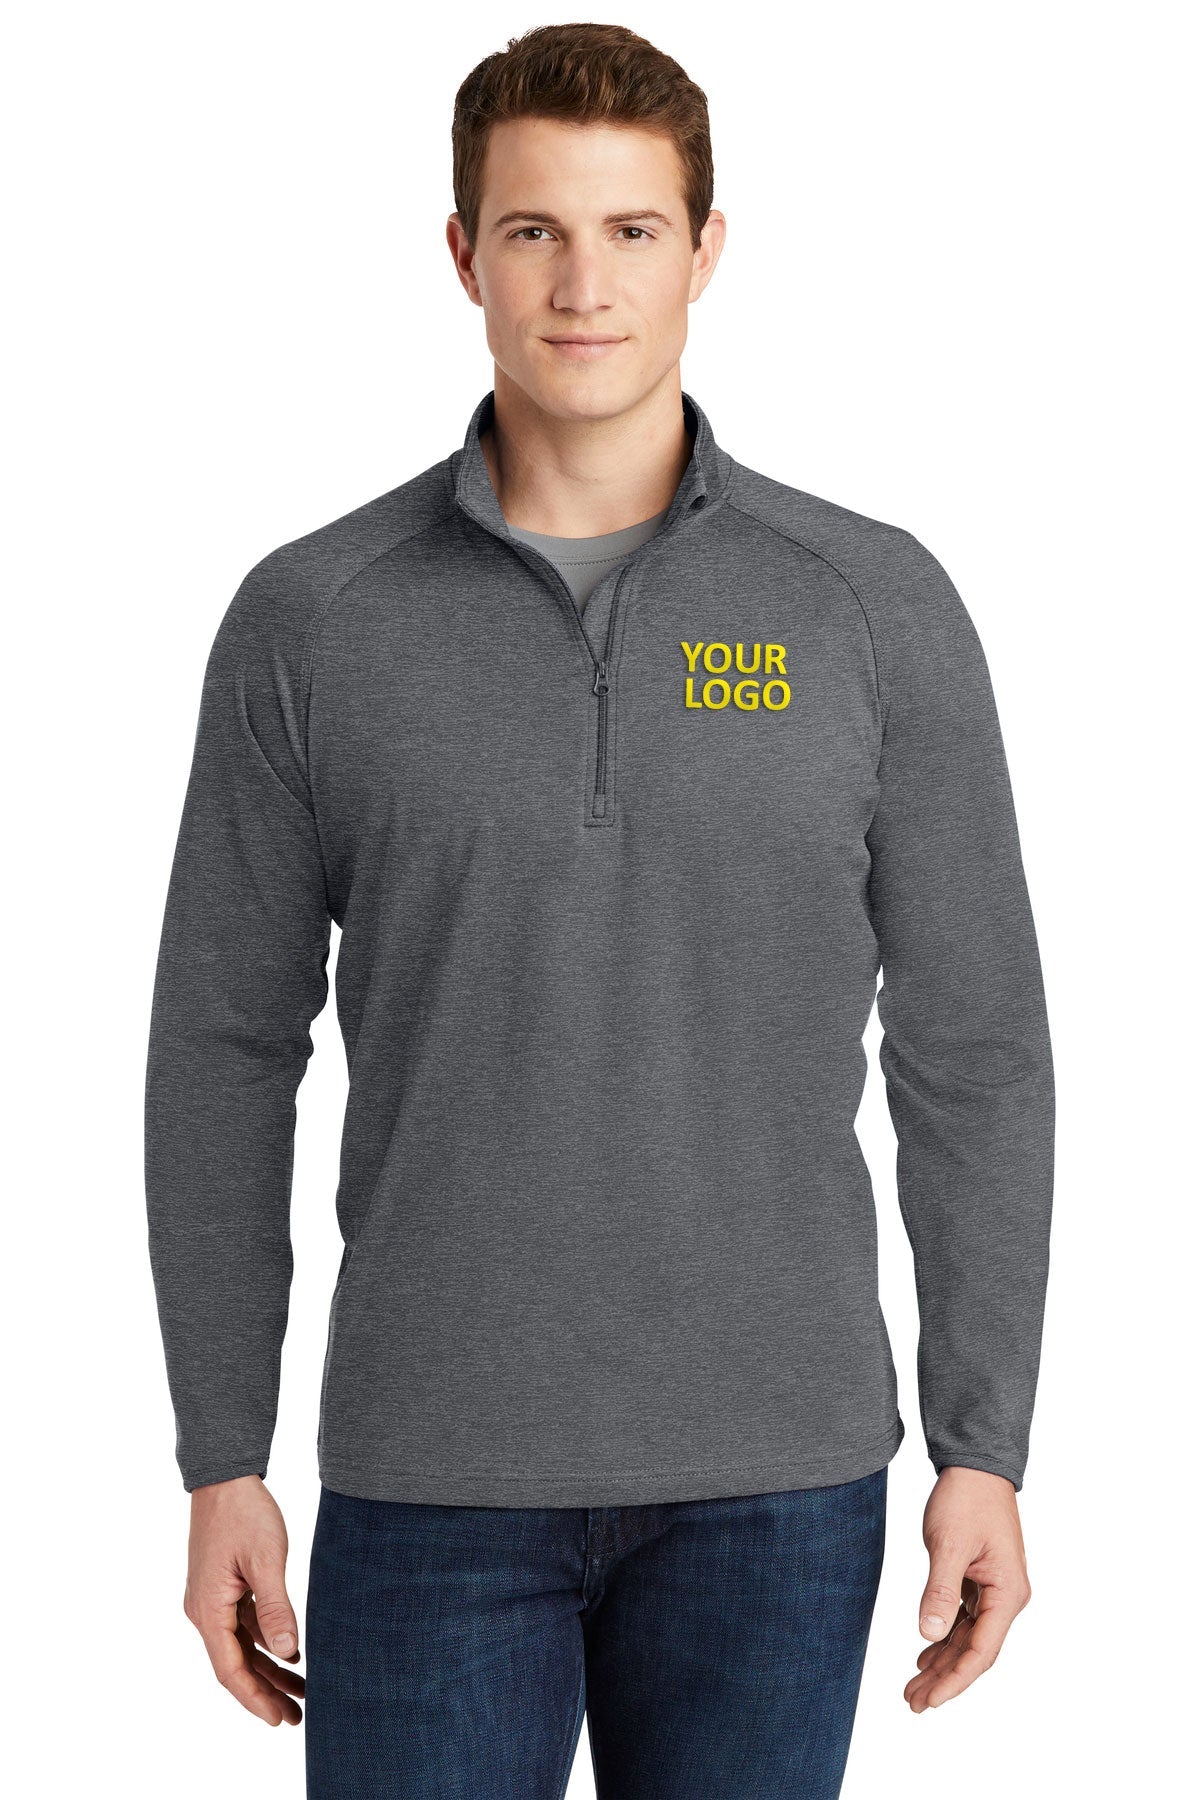 Sport-Tek Charcoal Grey Heather ST850 company sweatshirts printed